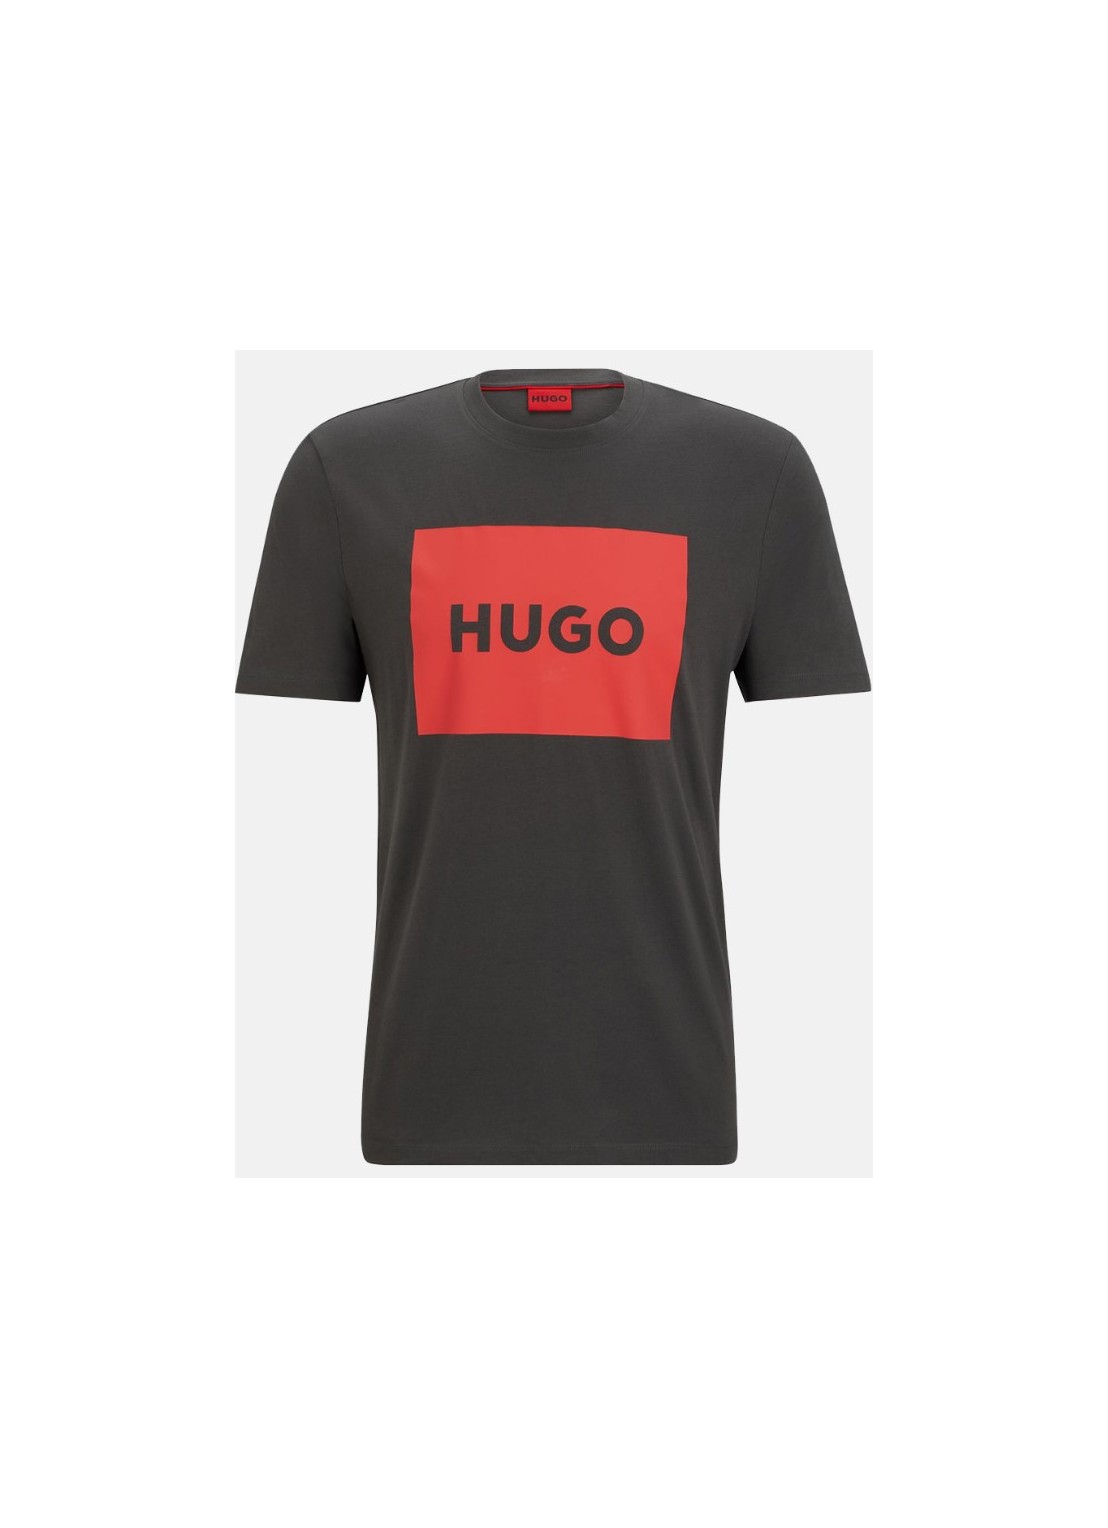 Camiseta hugo t-shirt man dulive222 50467952 023 talla L
 